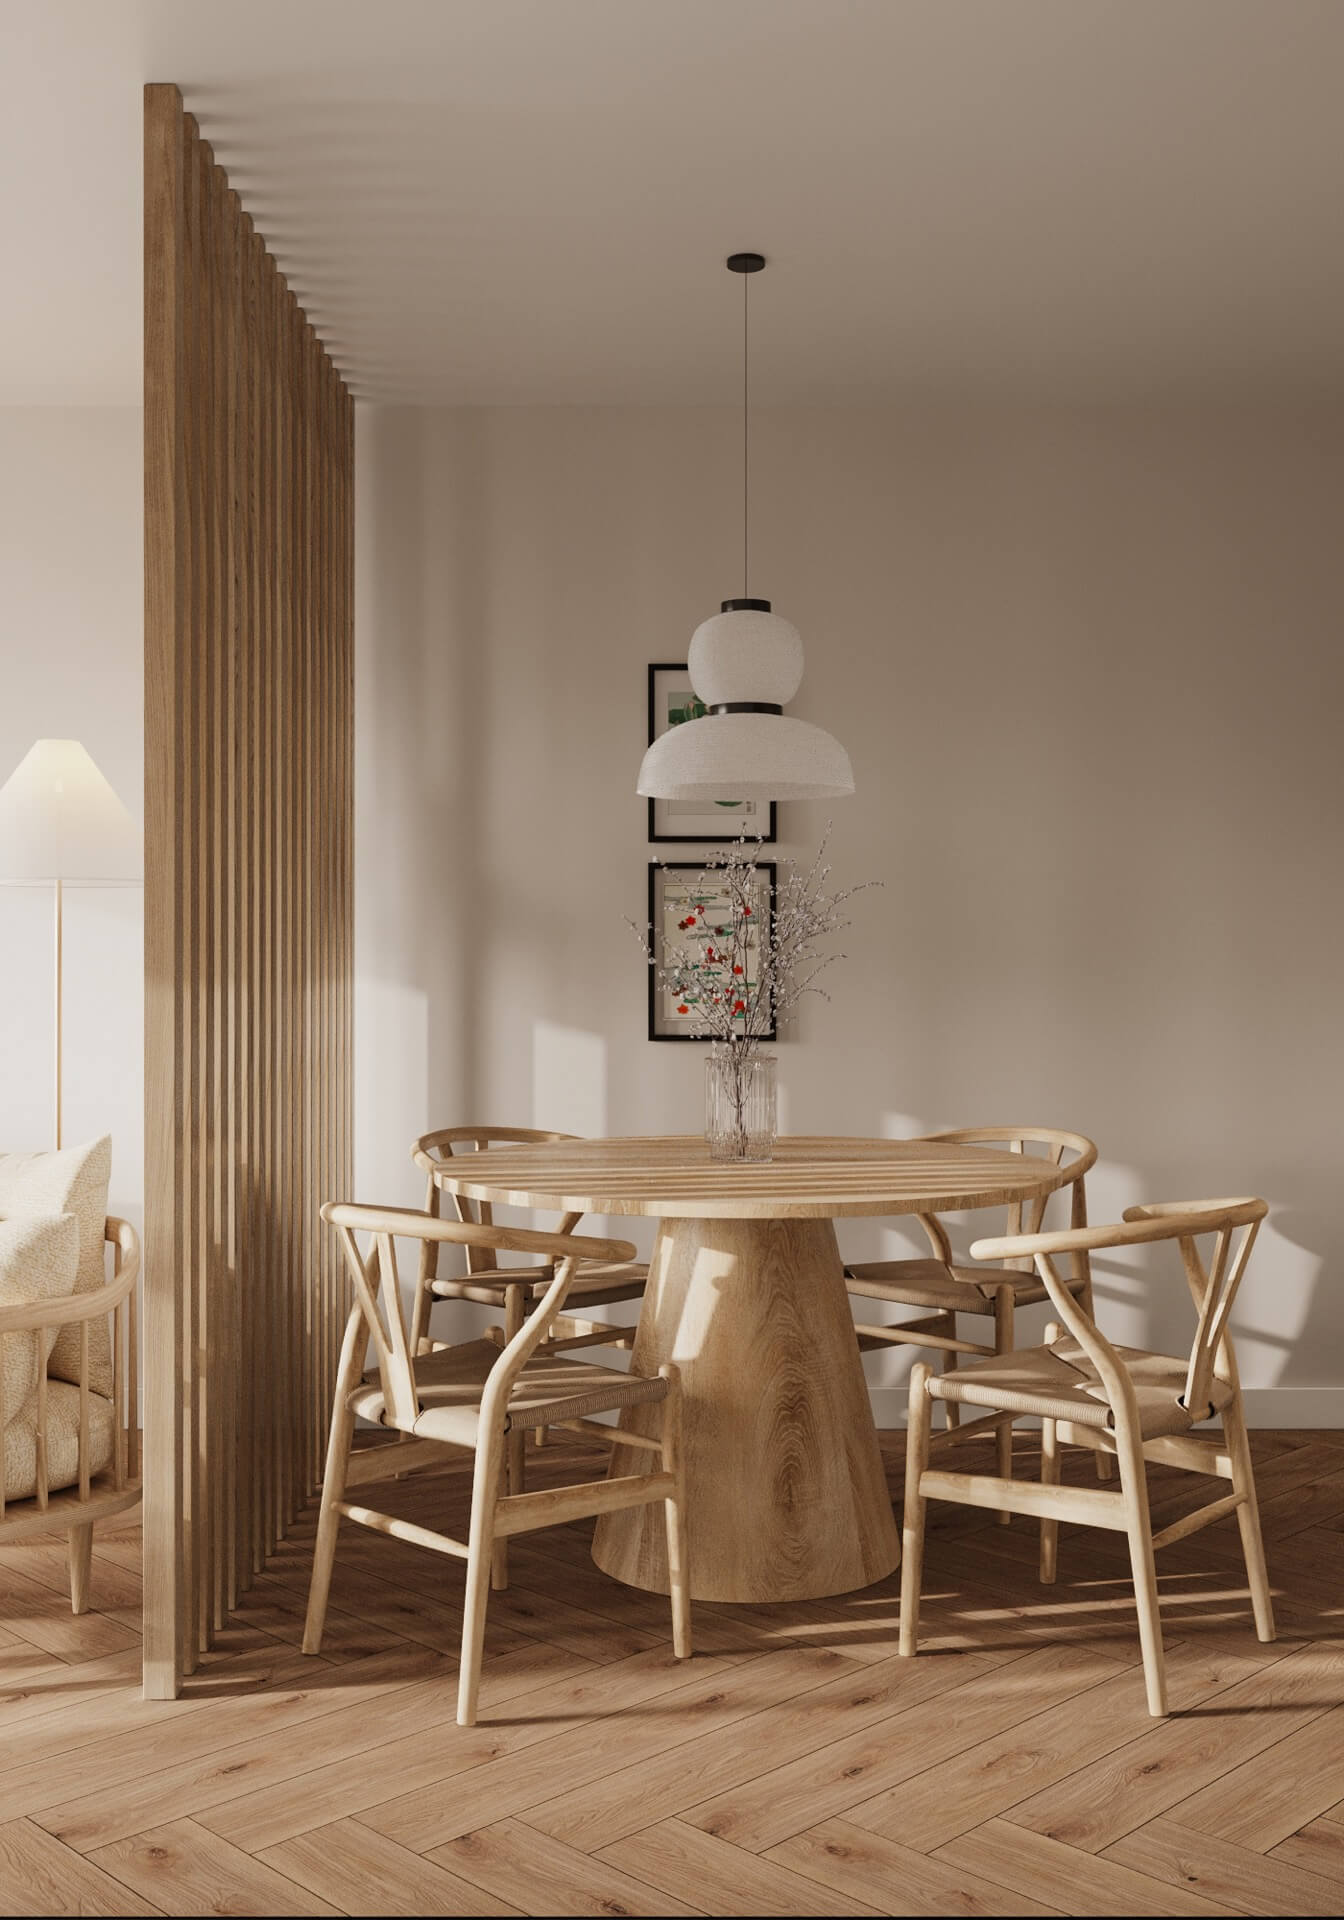 Japanese inspired dining room by Interior designer Raluca Vaduva of Detail Movement